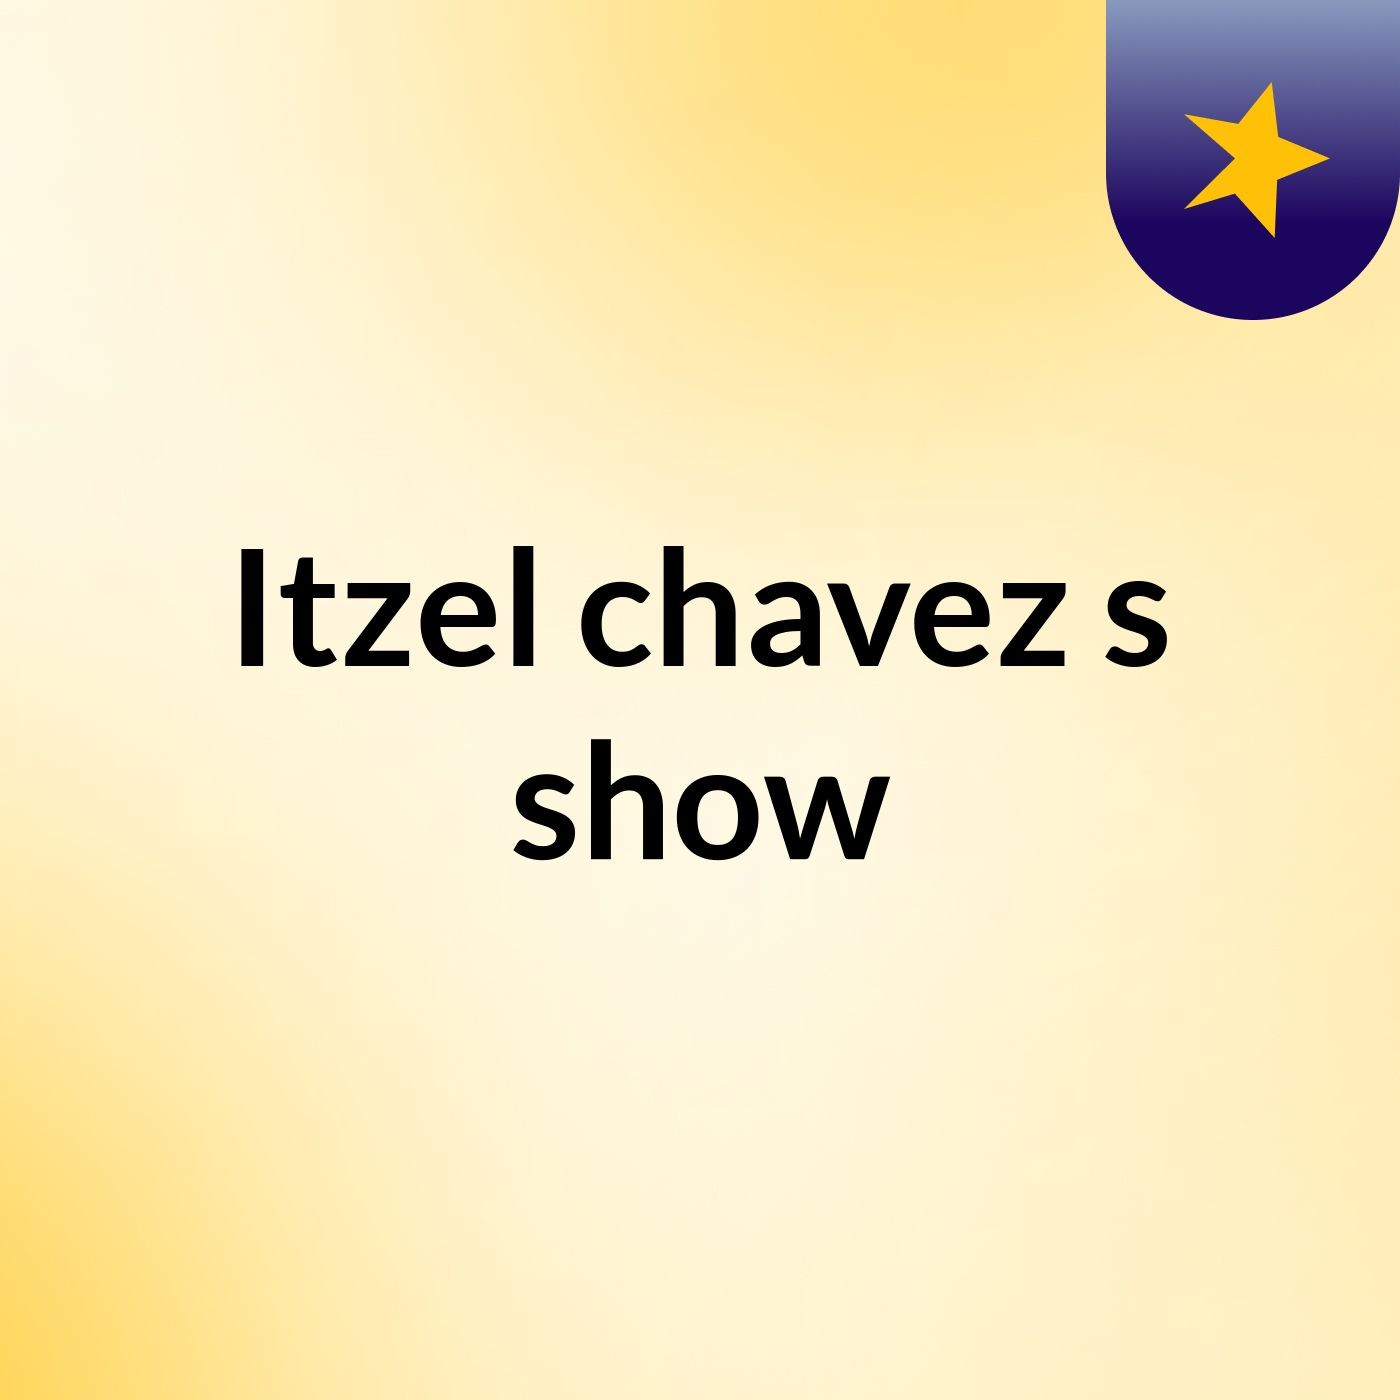 Itzel chavez's show